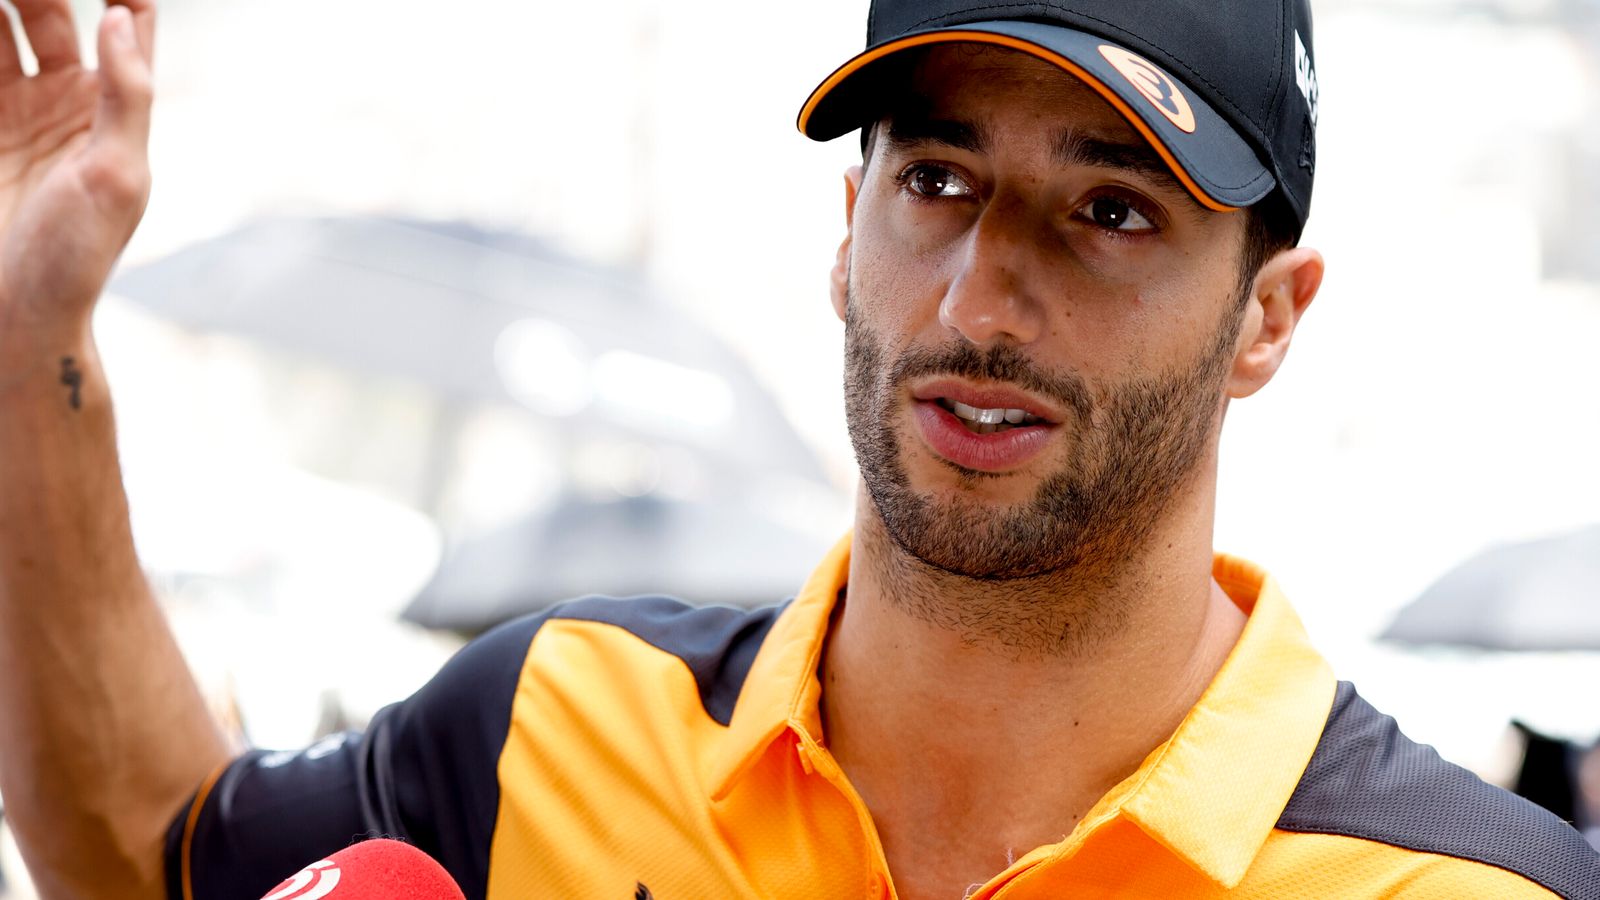 Daniel Ricciardo has McLaren contract but ‘mechanisms’ for 2023 as F1 ‘rumours grow louder’